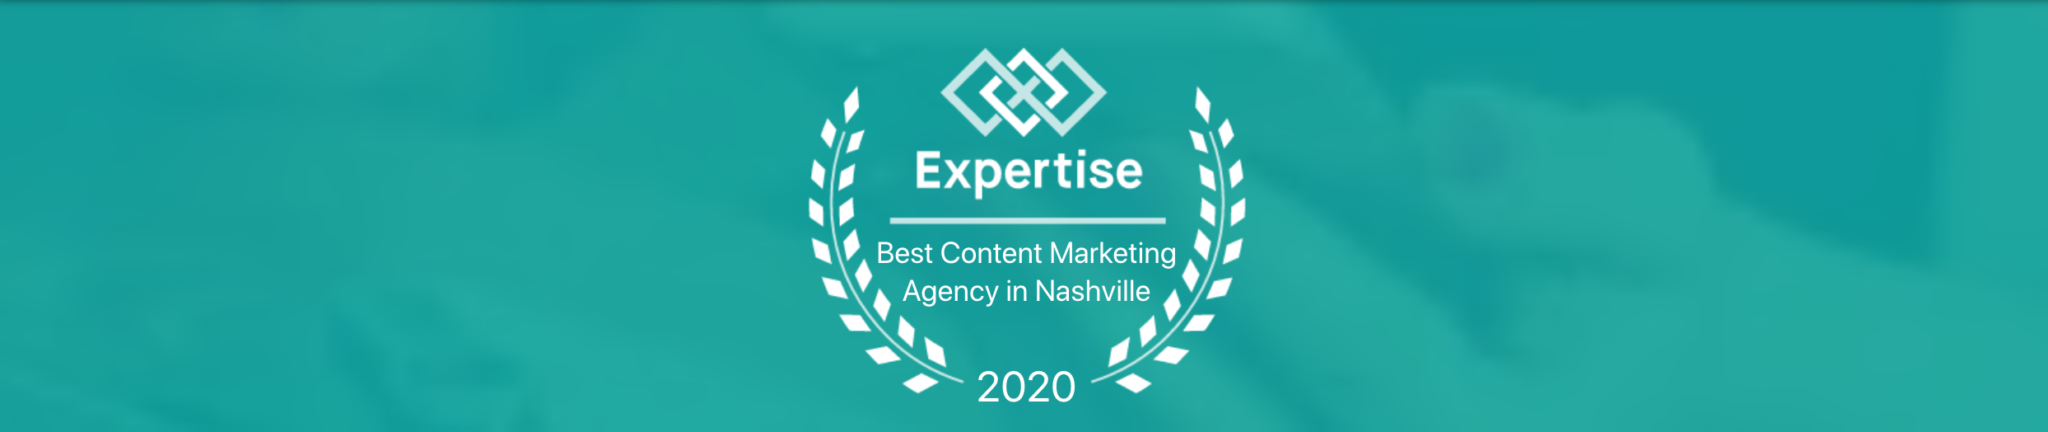 Best Content Marketing Agency in Nashville